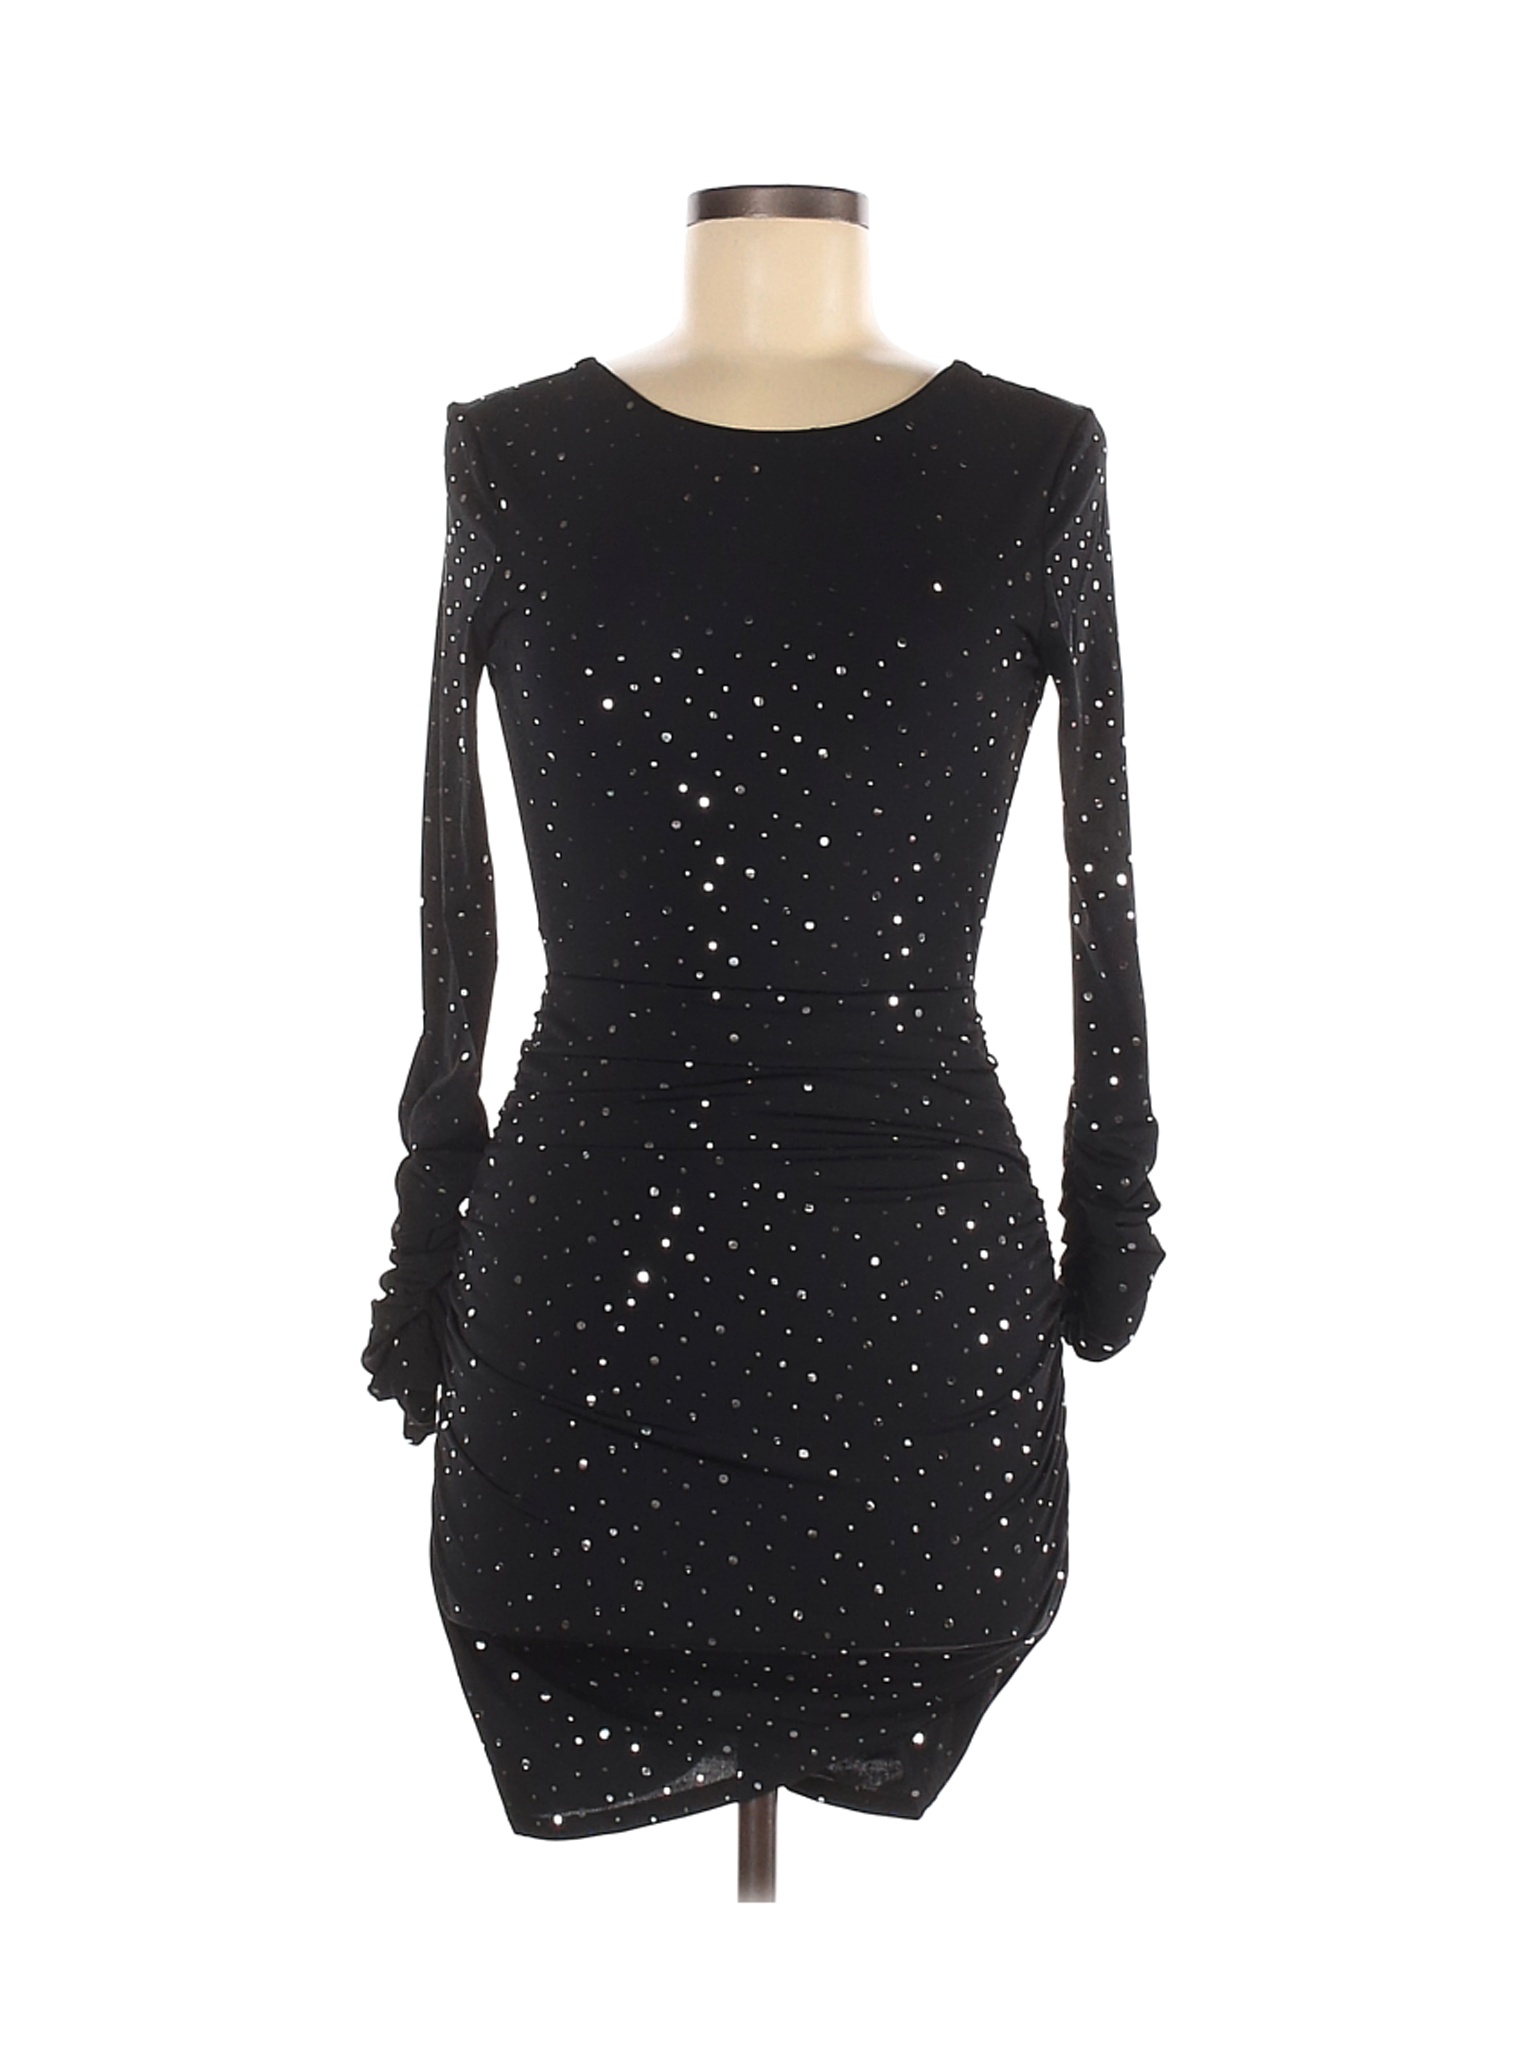 Lucy In The Sky Women Black Cocktail Dress M | eBay